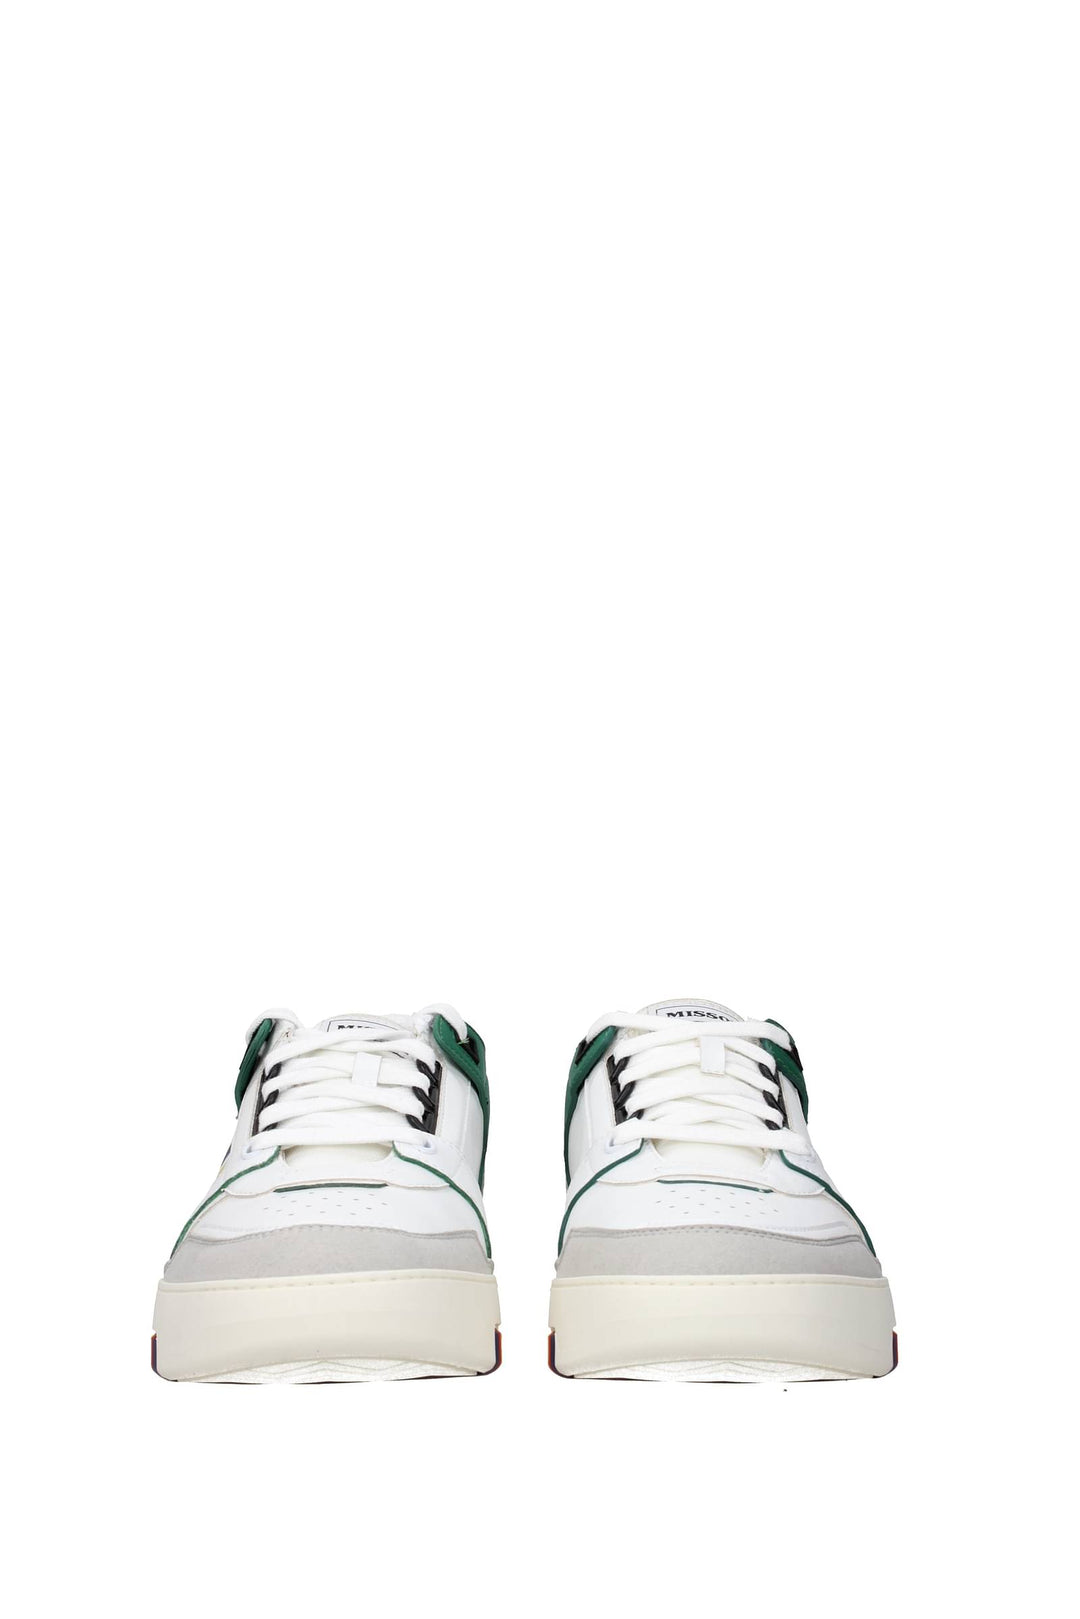 Sneakers Acbc Pelle Bianco Verde Pino - Missoni - Uomo